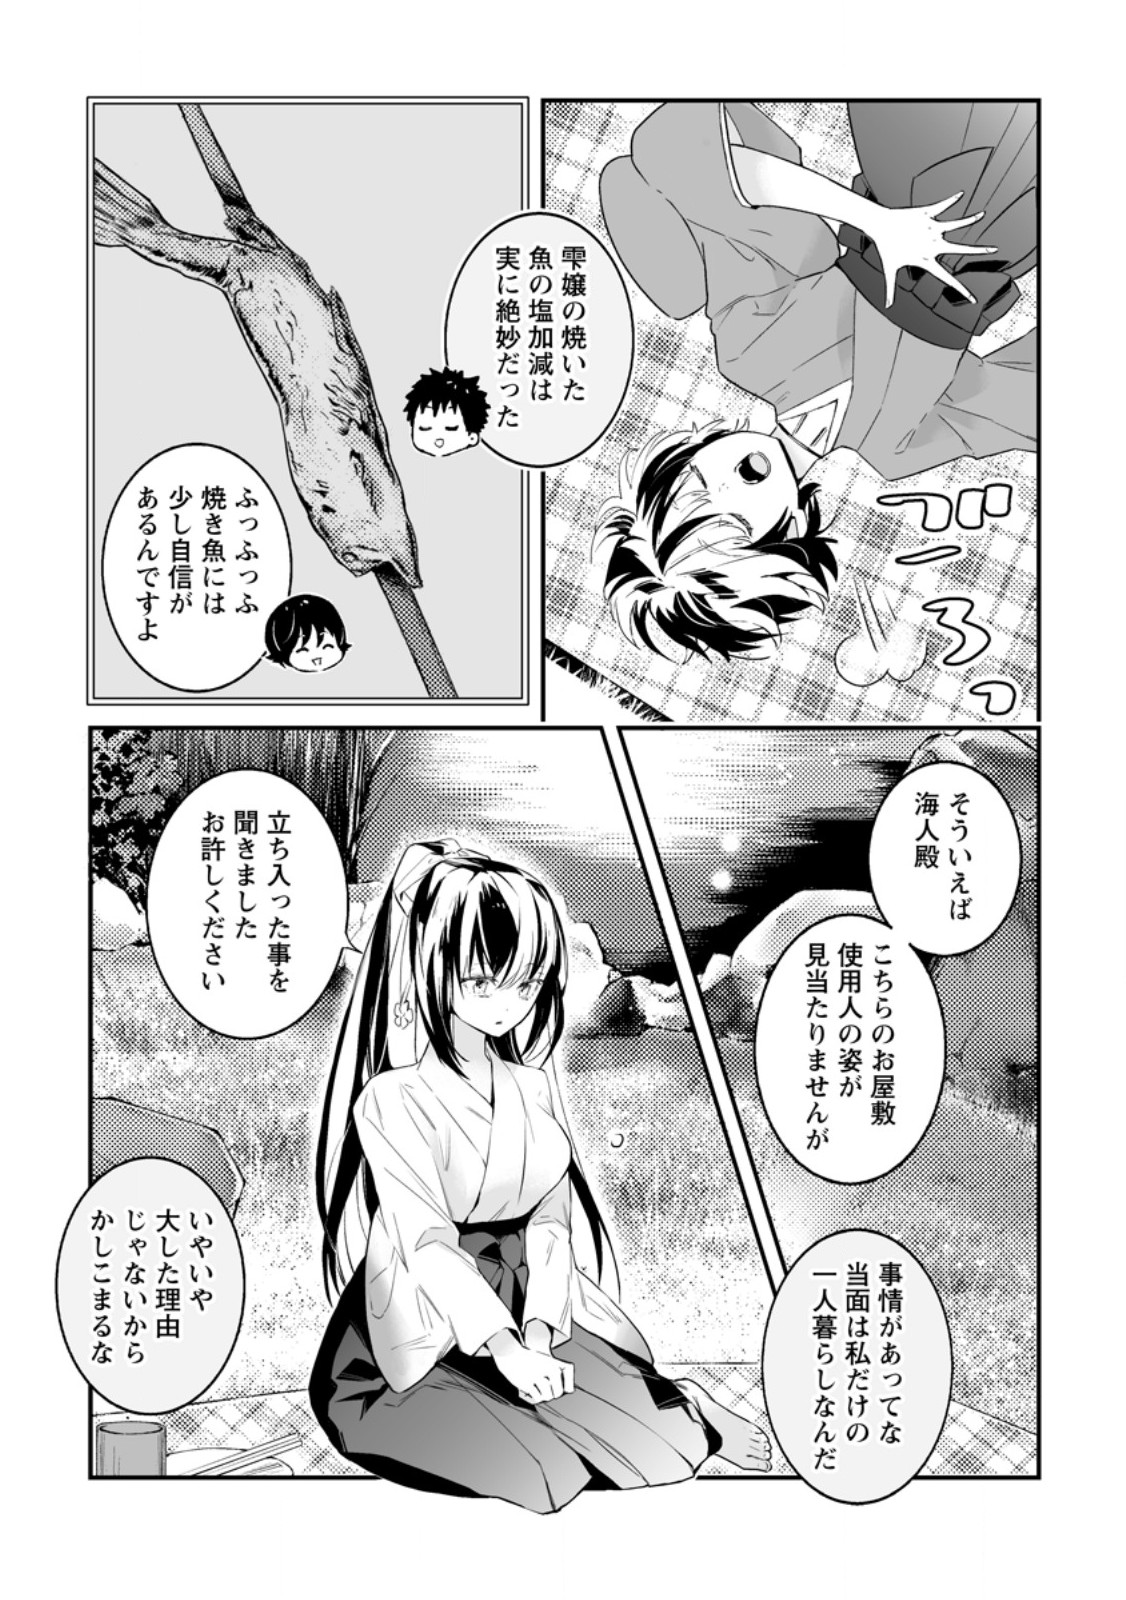 Hakui no Eiyuu - Chapter 31.1 - Page 3